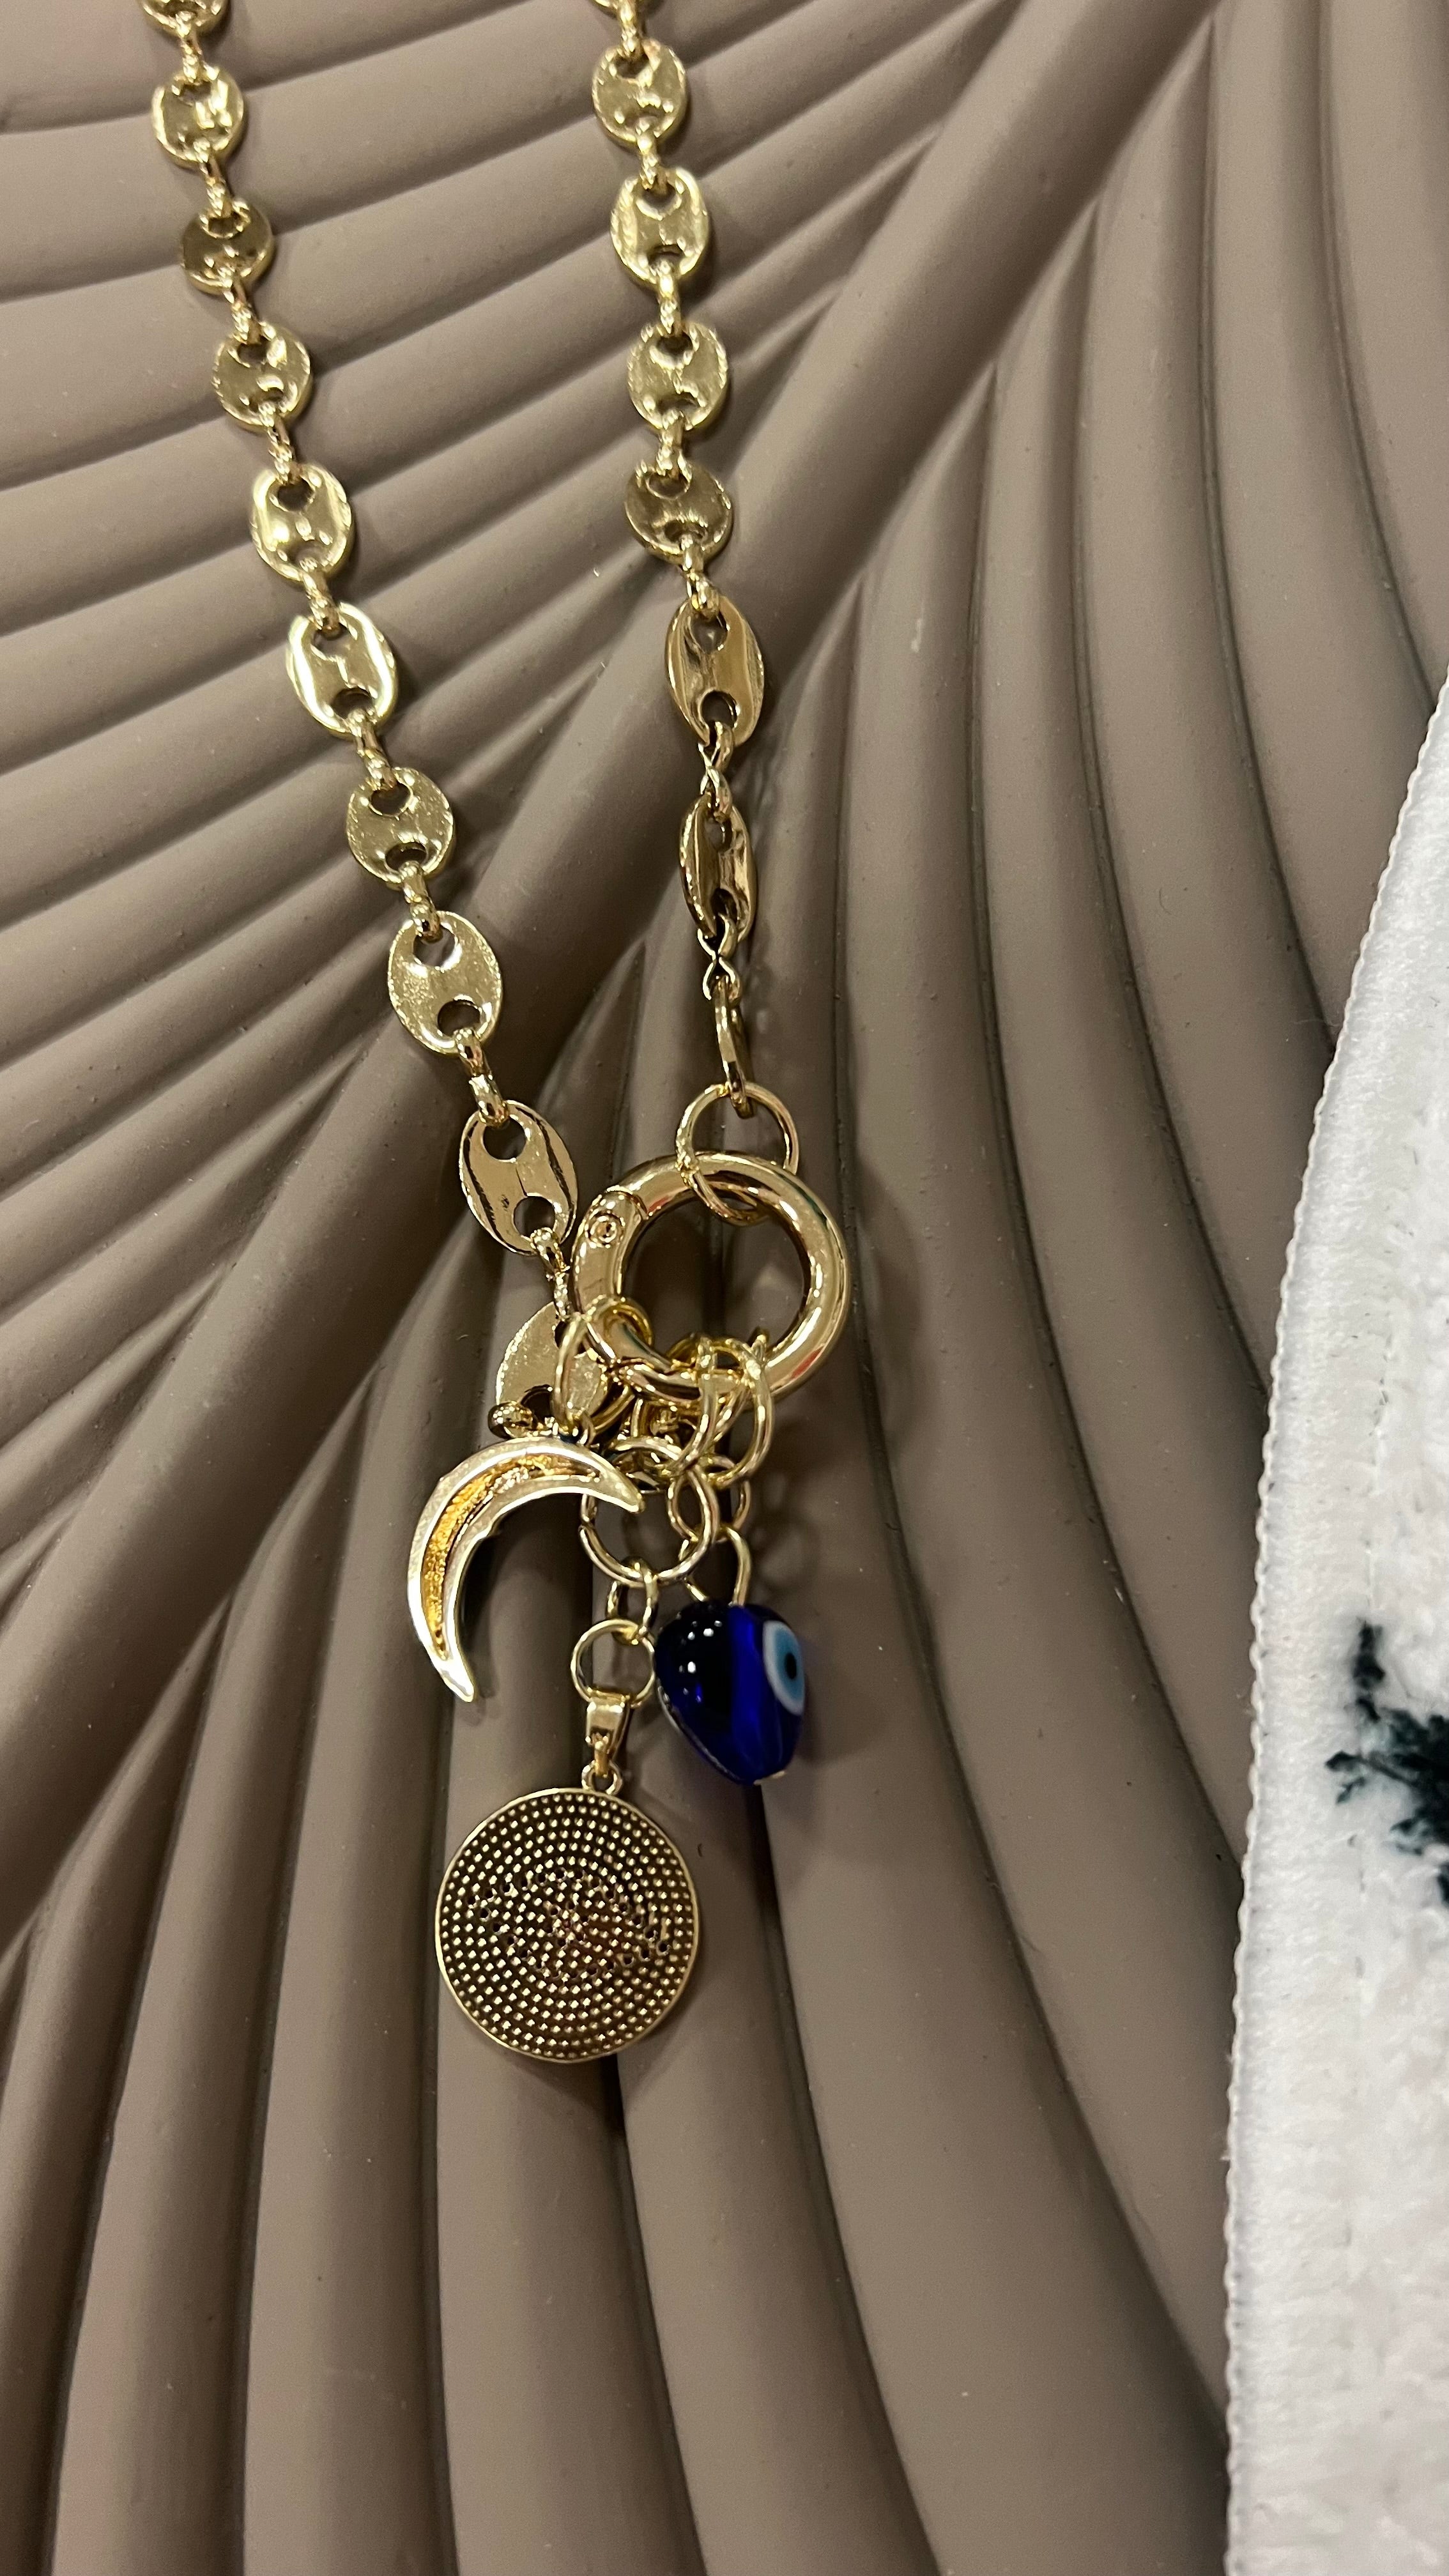 Necklace gold plated pendants blue evil eye heart, moon